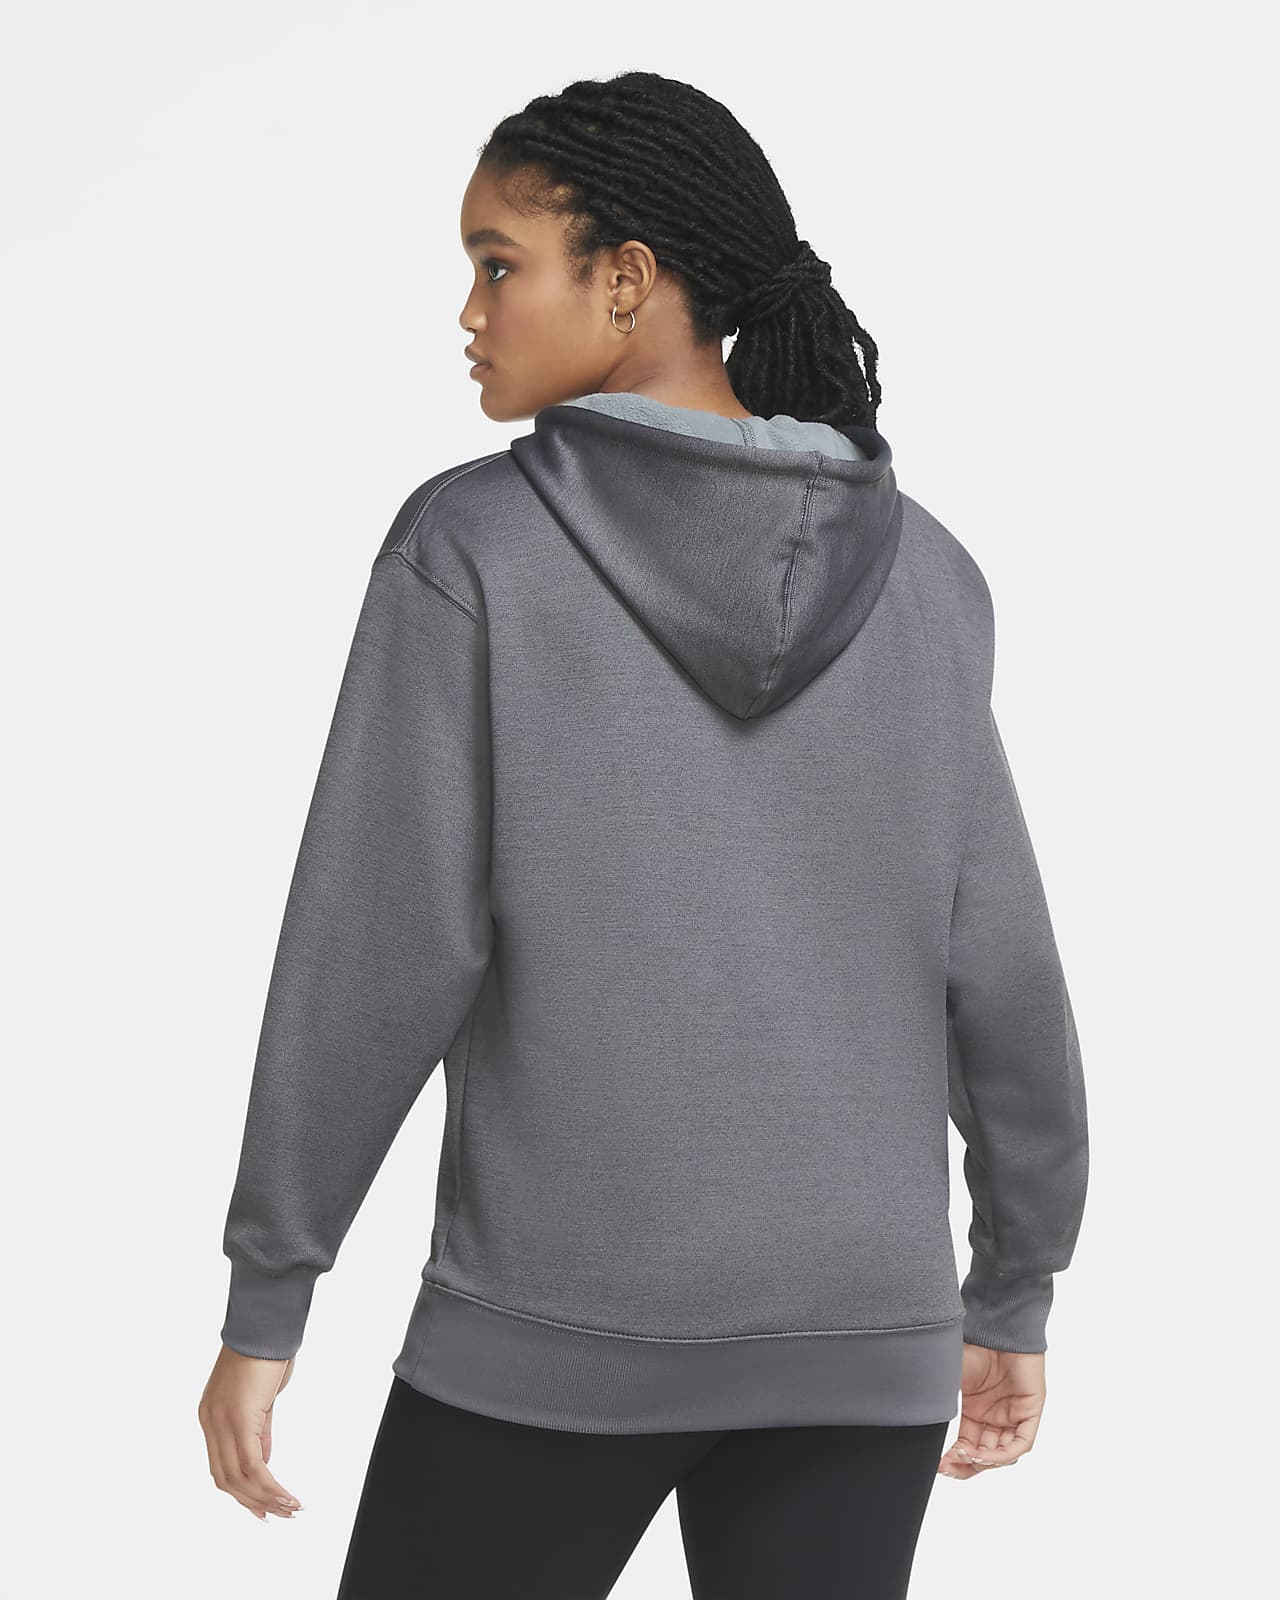 women's nike therma fleece training hoodie